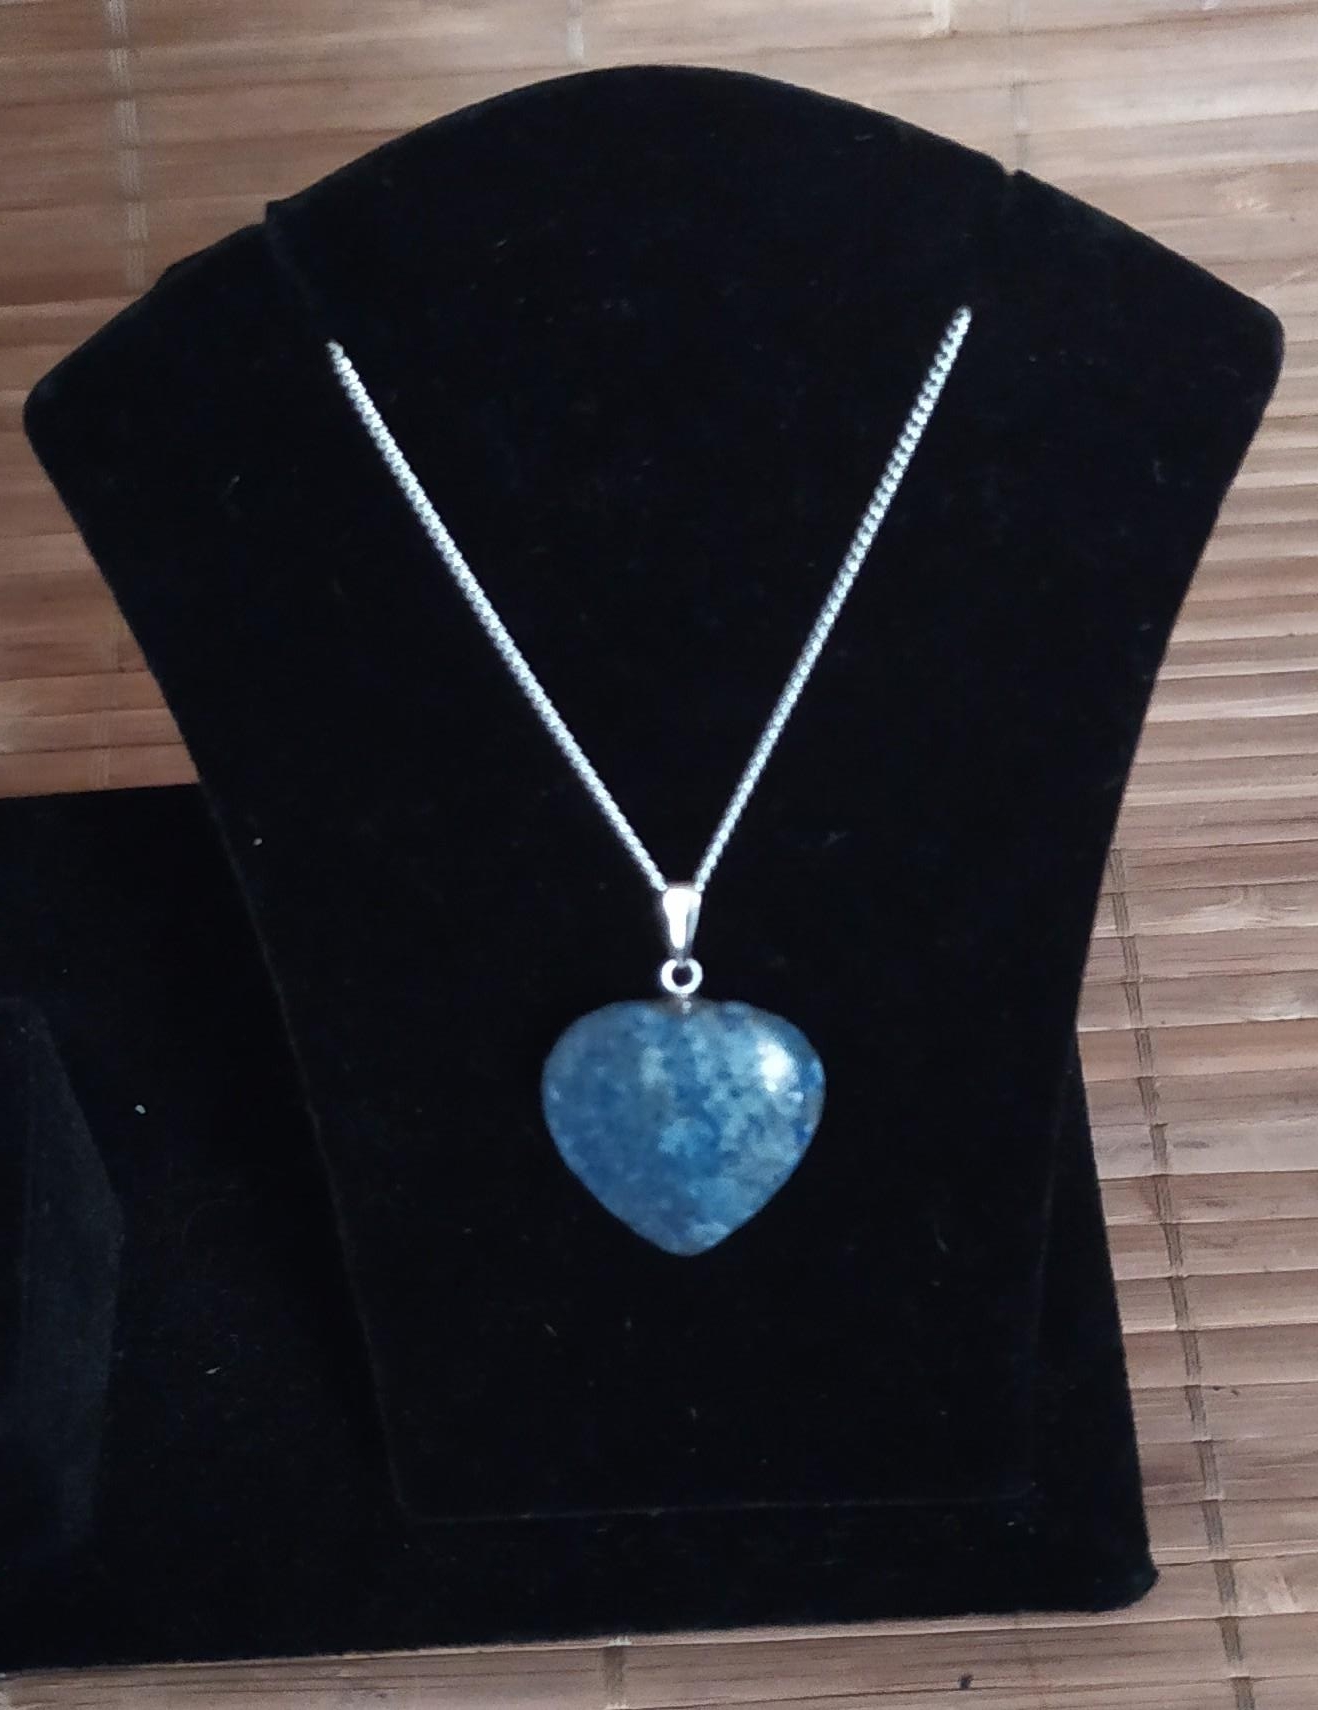 Pendentif coeur lapis lazuli